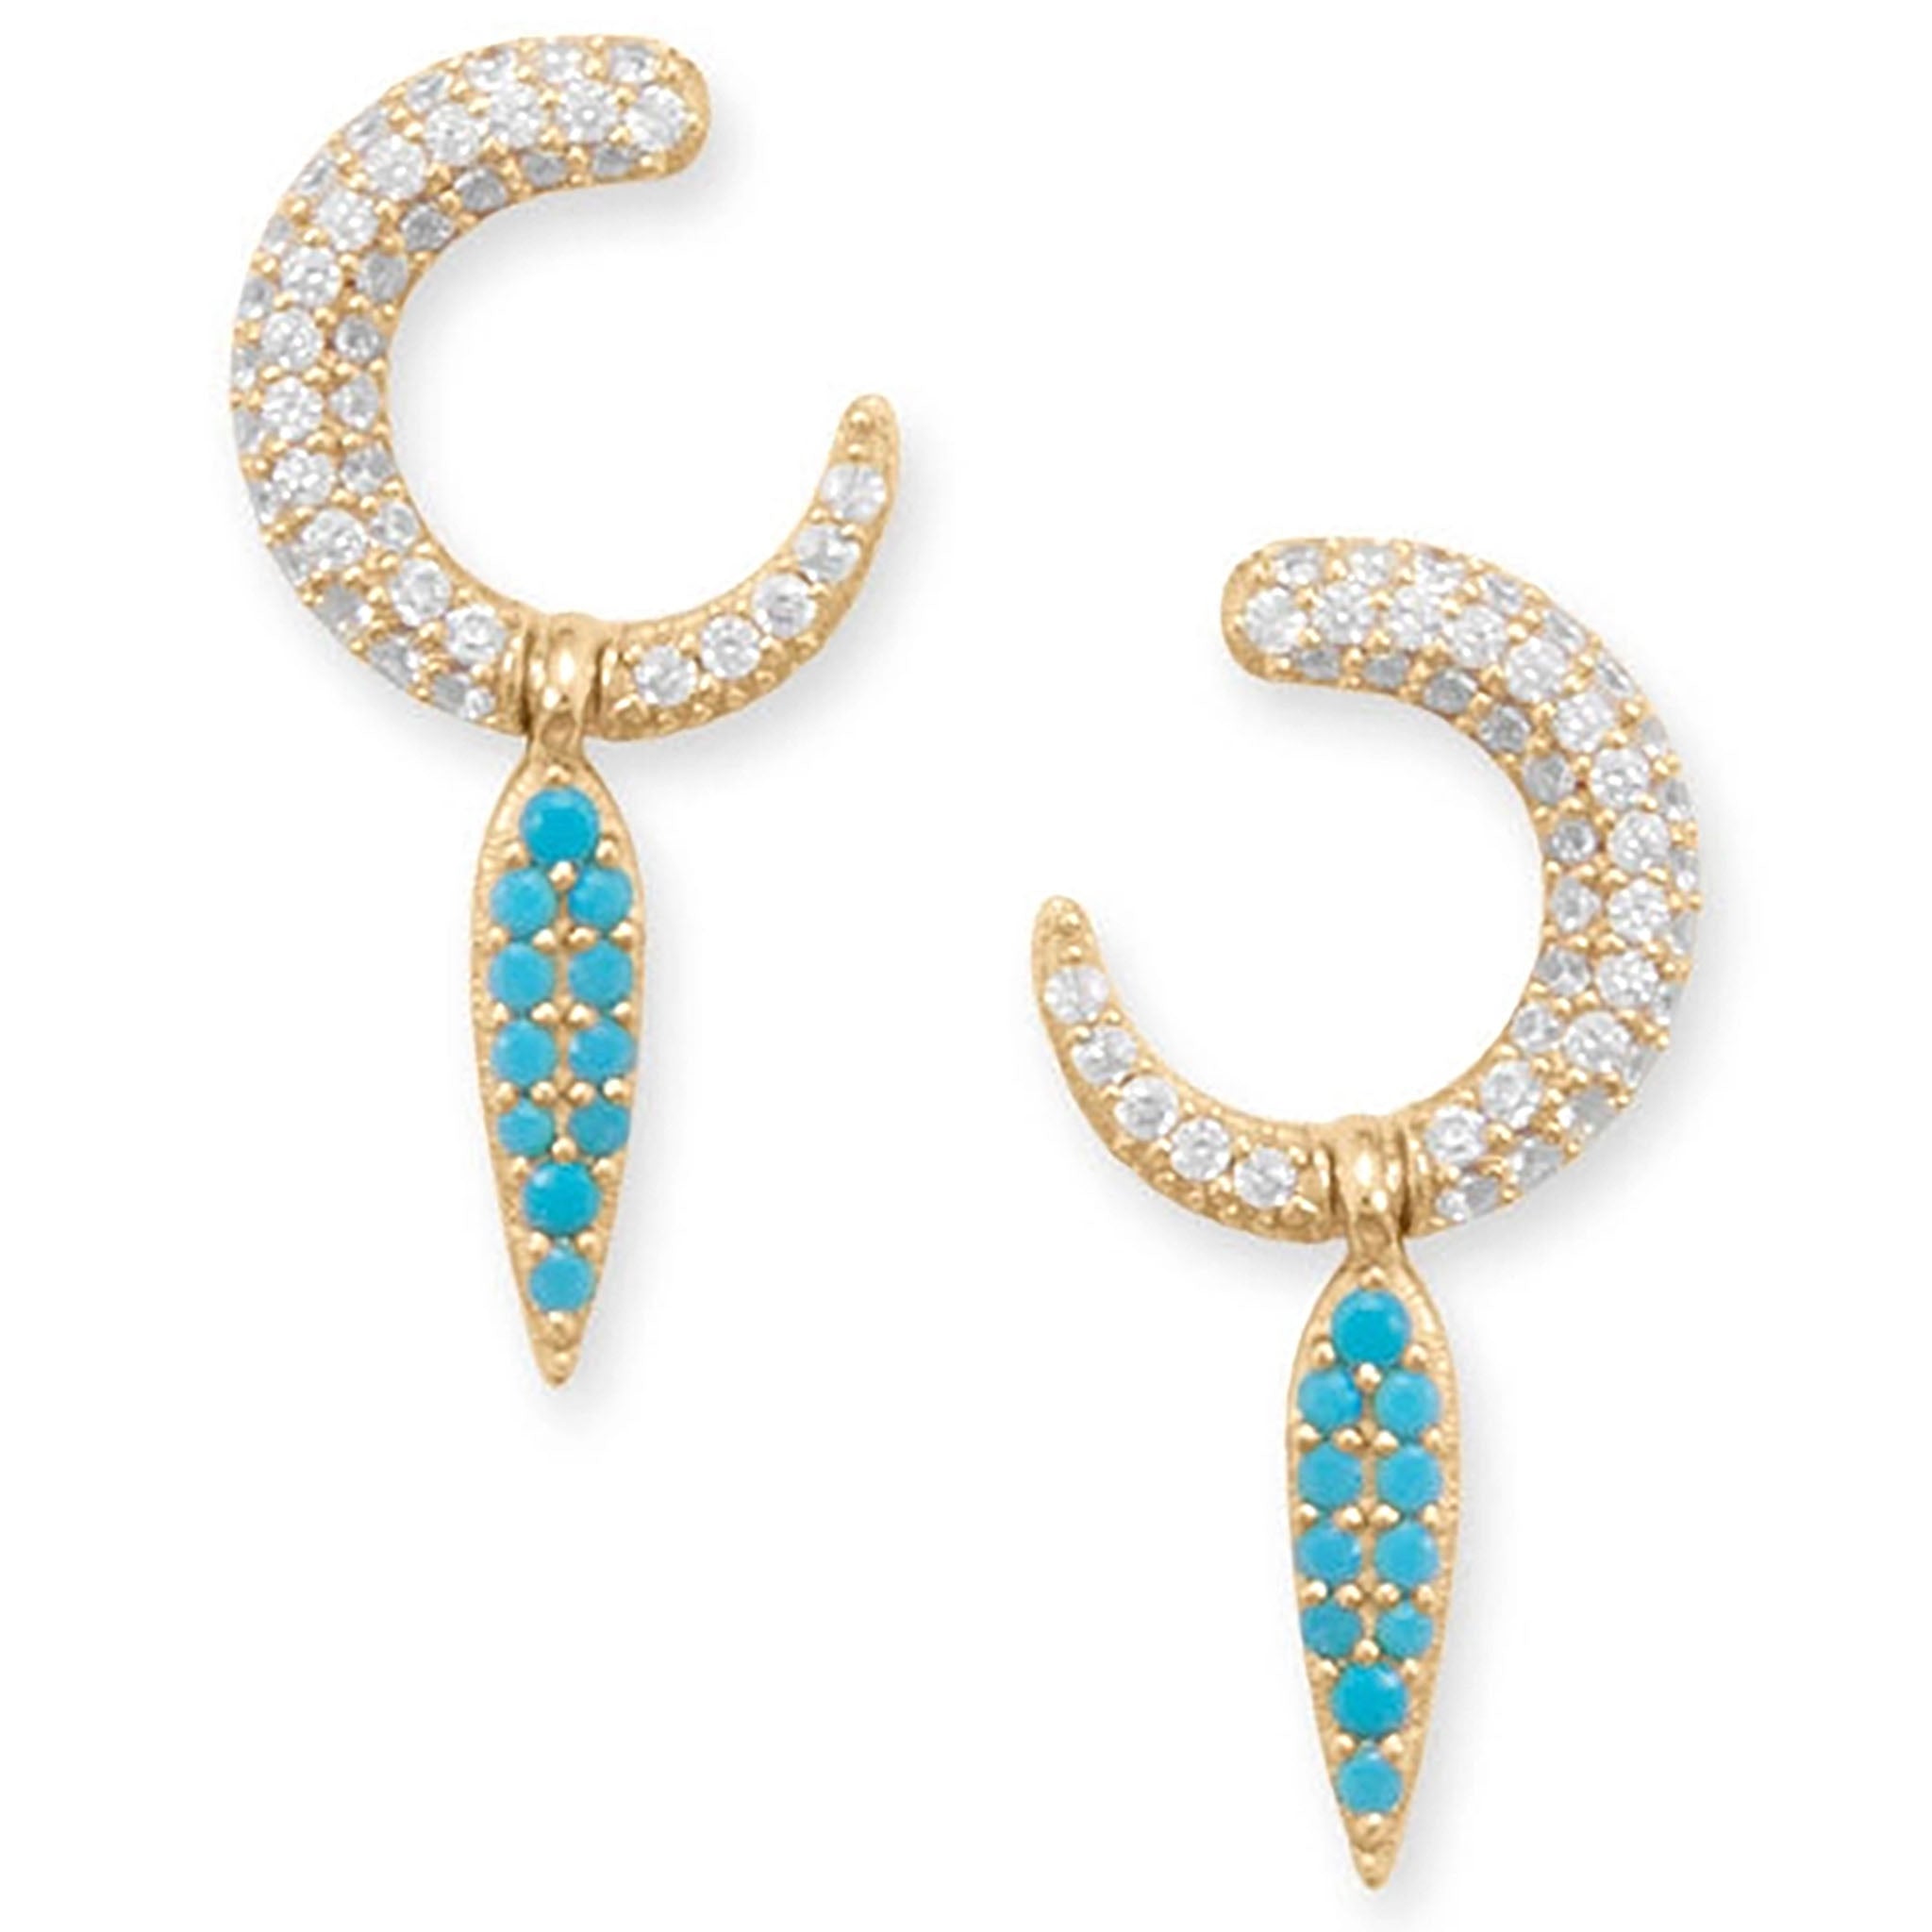 Turquoise and Zirconia Crescent Earrings